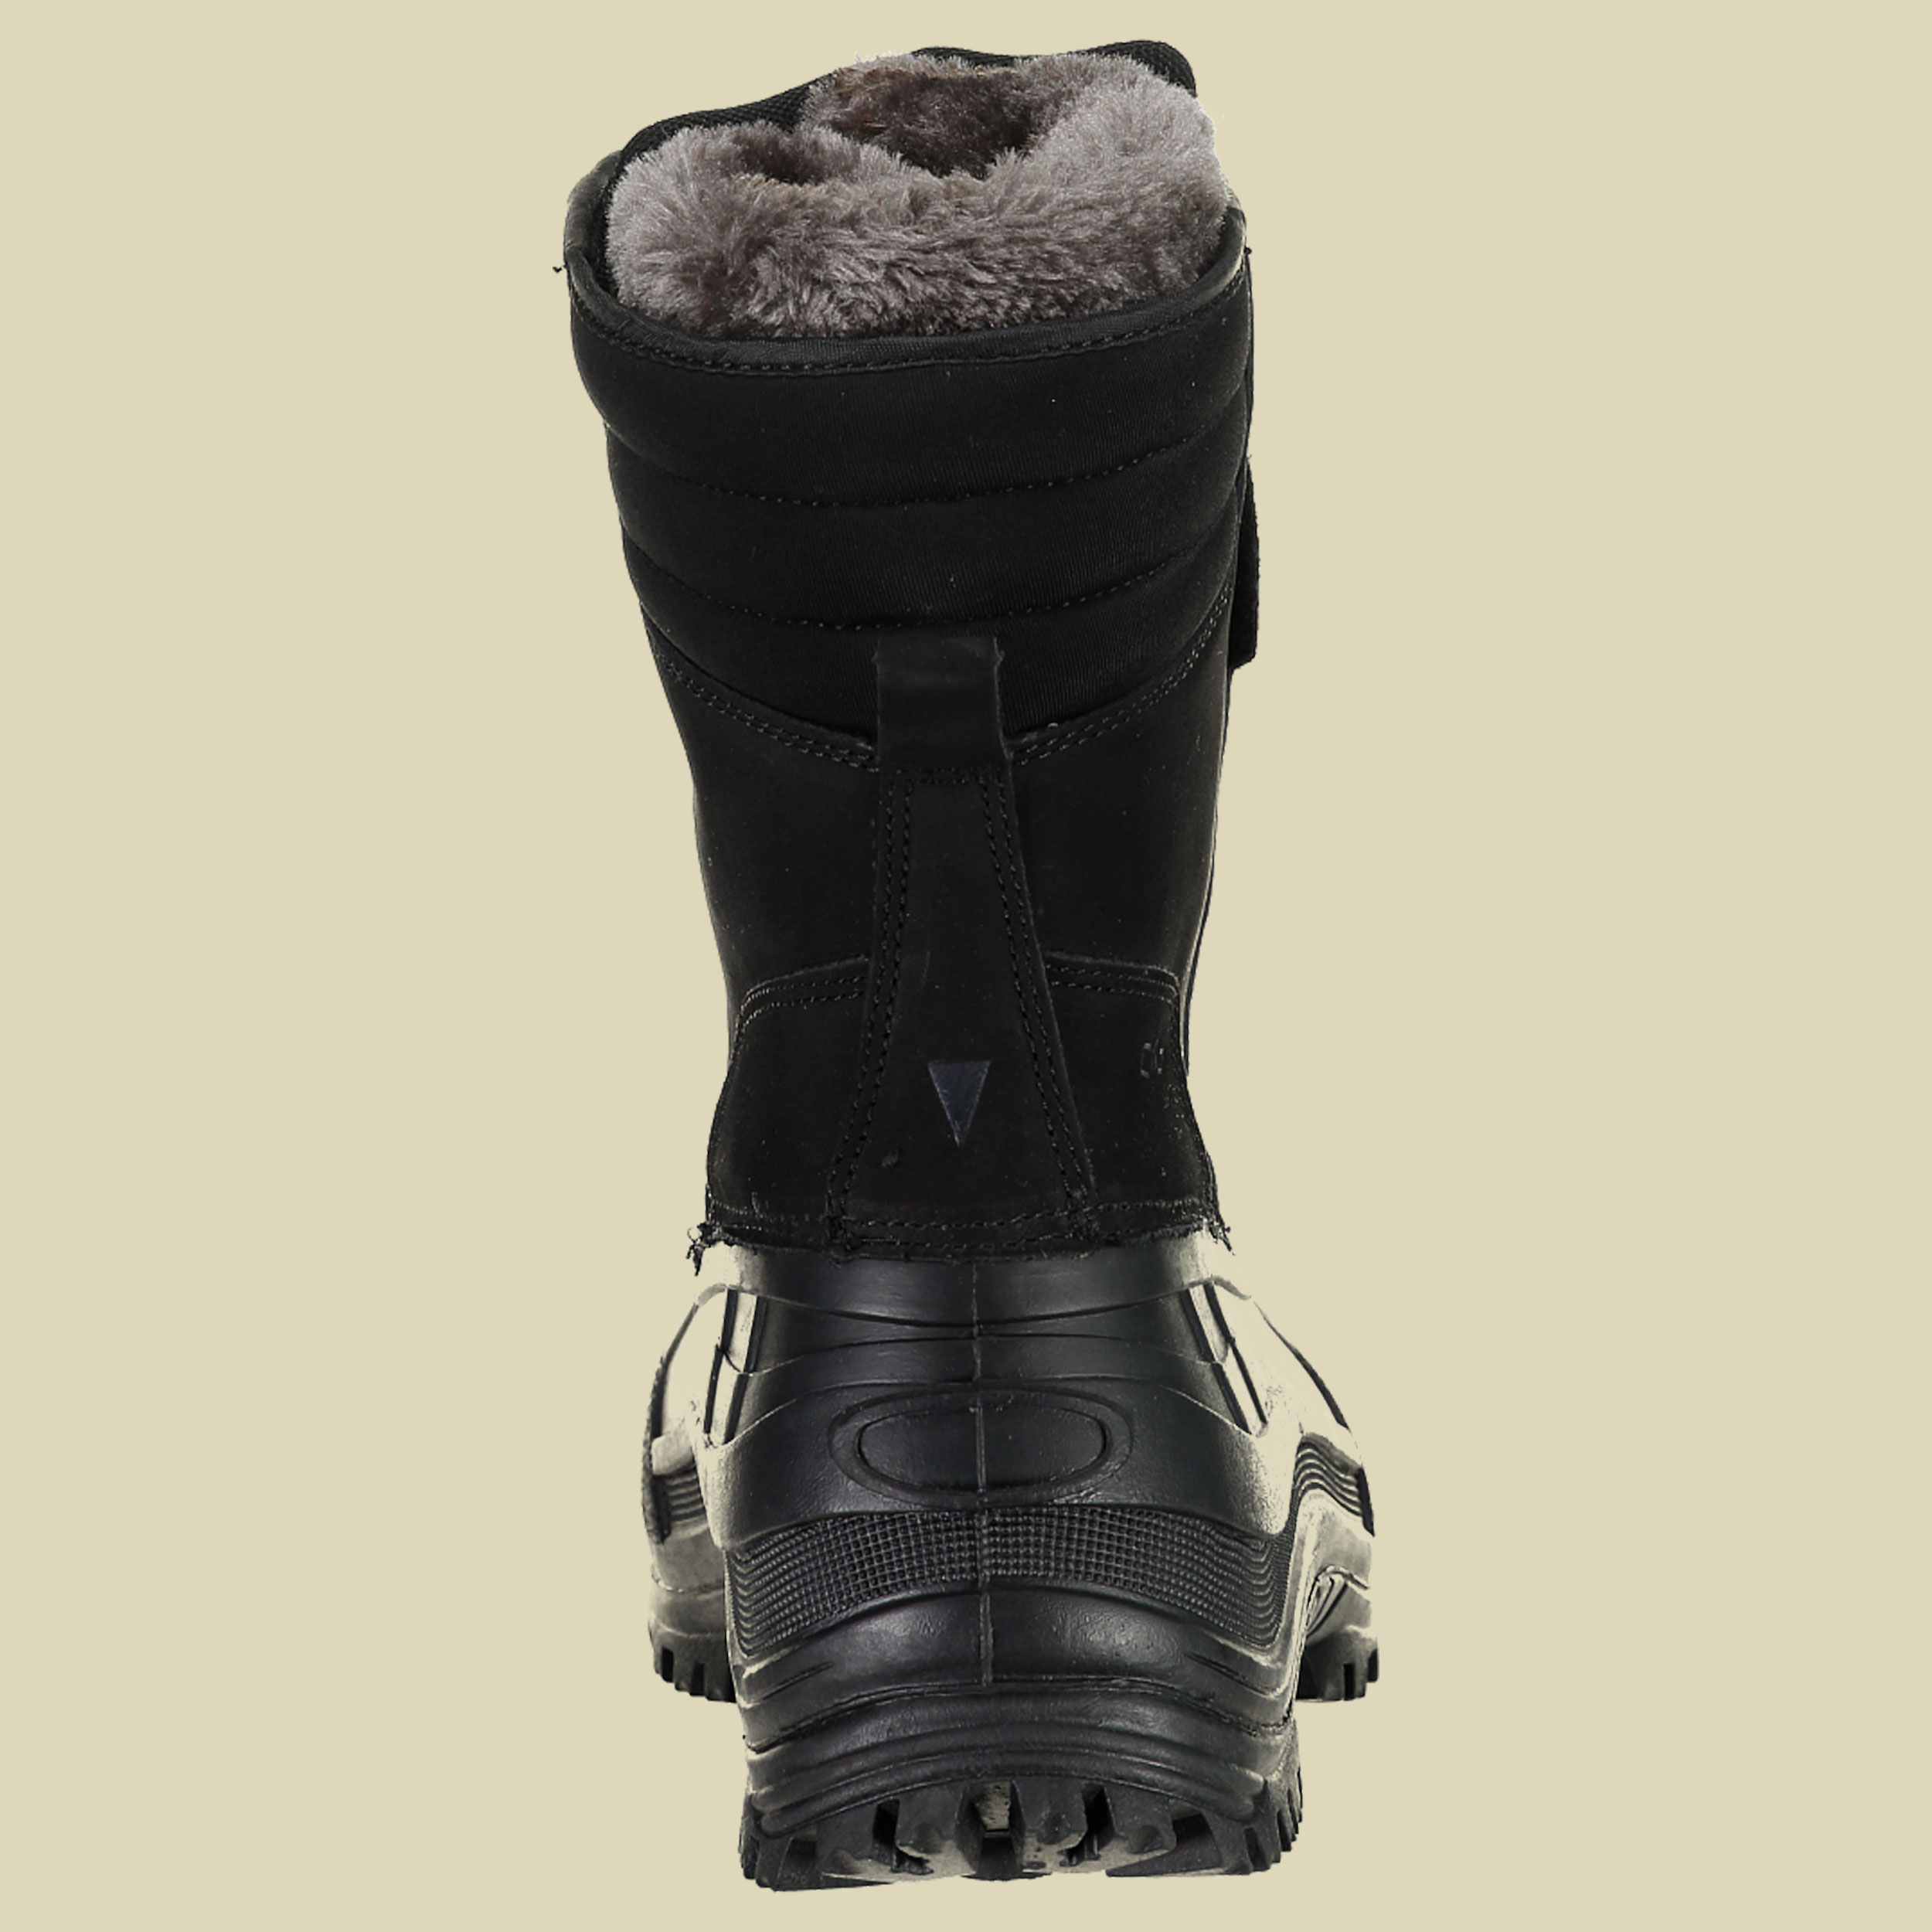 Kinos Snow Boots WP Men Größe 45 Farbe U901 black